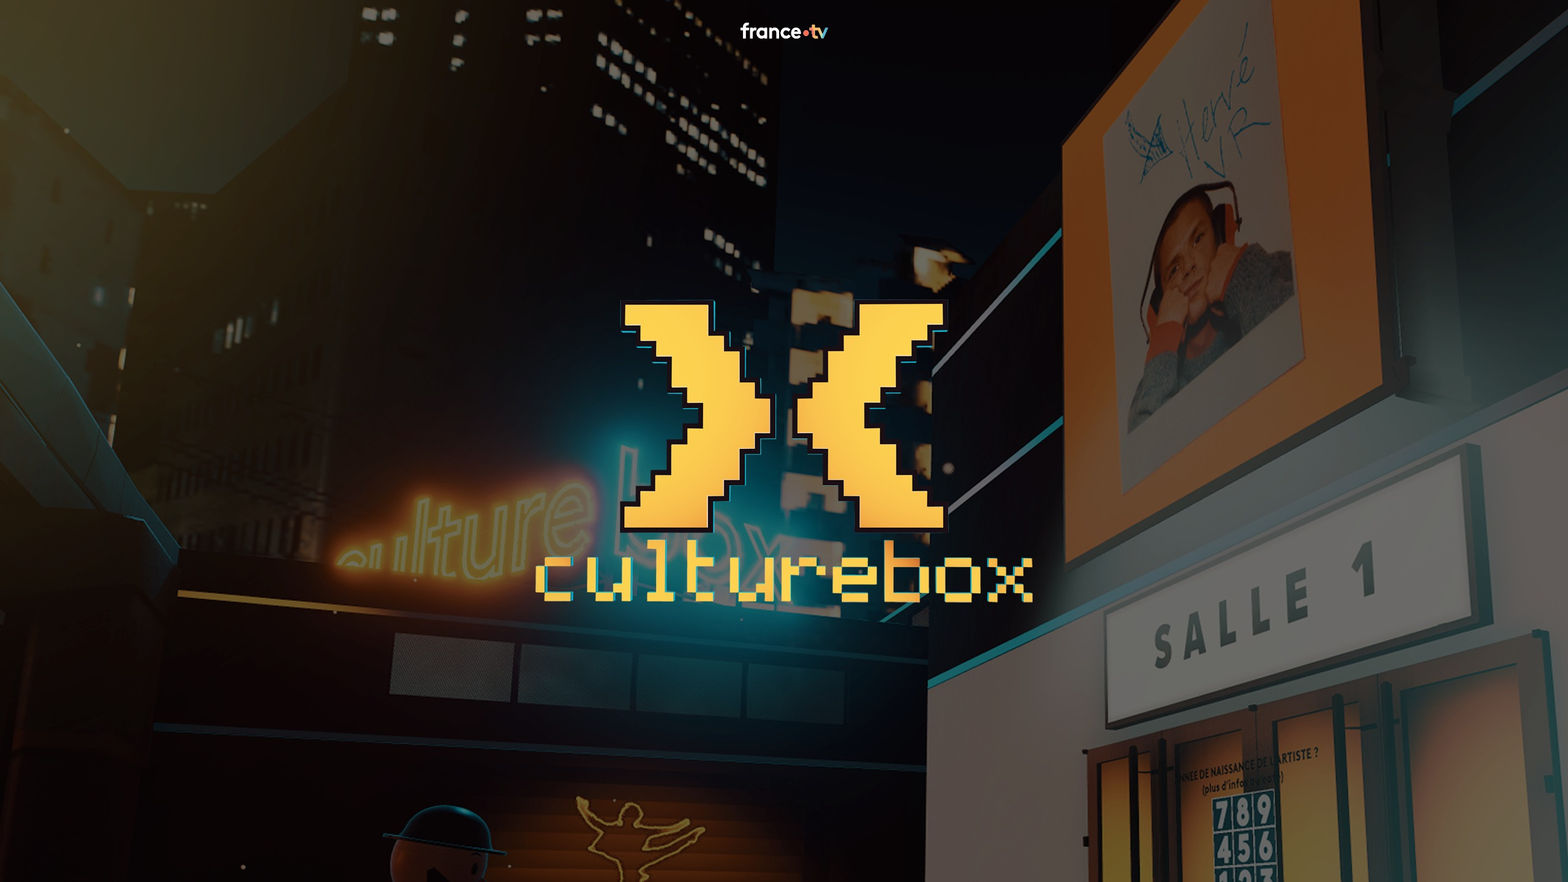 Culturebox, the immersive experience - Hervé